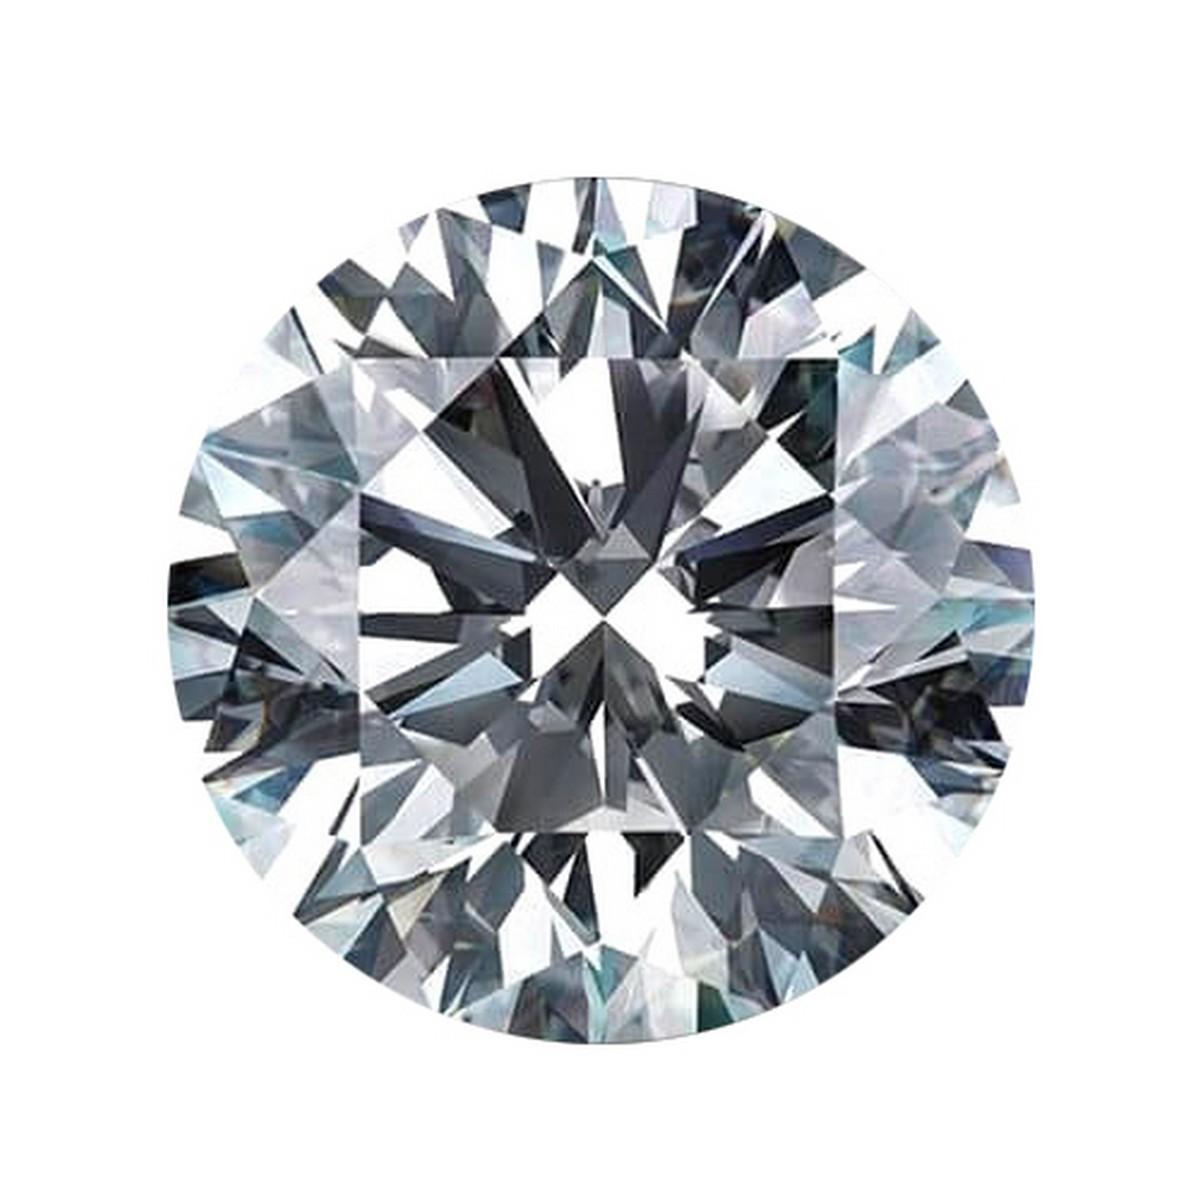 1.2 ctw. VVS2 IGI Certified Round Brilliant Cut Loose Diamond (LAB GROWN)